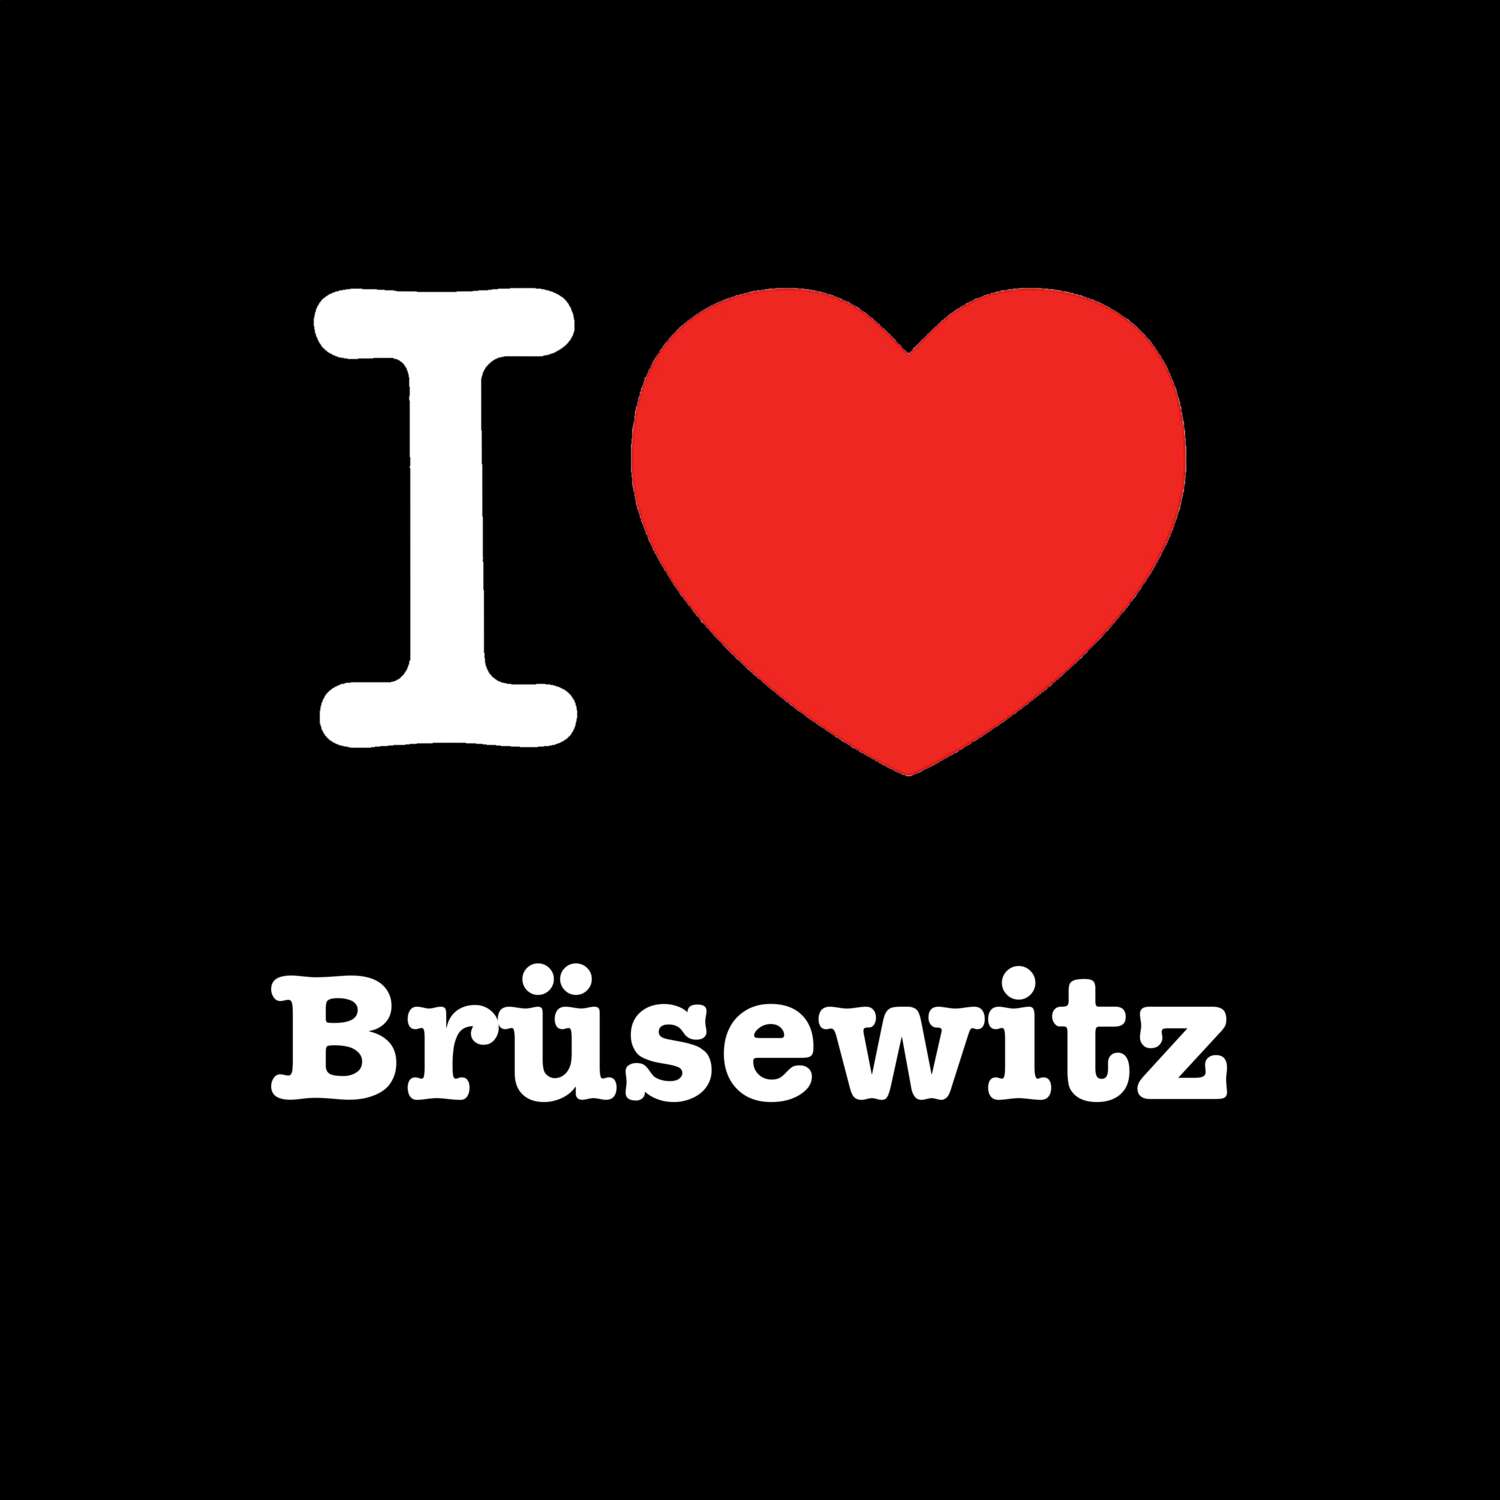 Brüsewitz T-Shirt »I love«